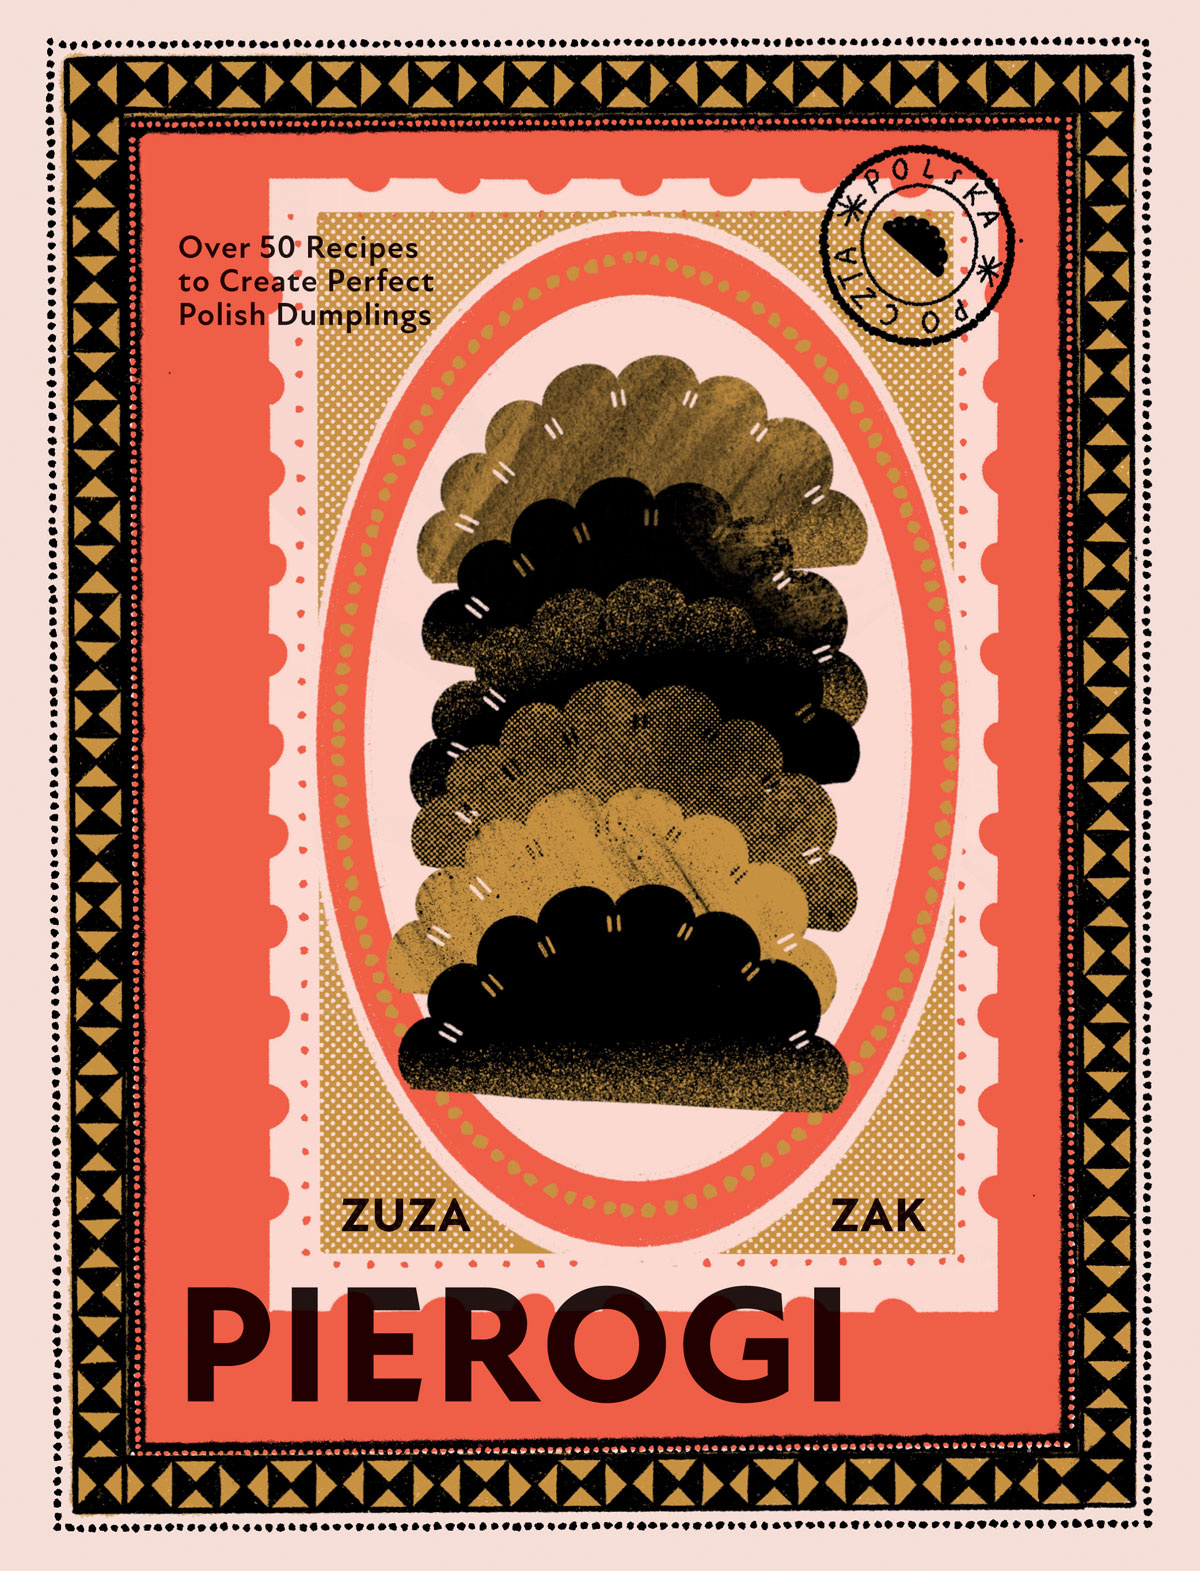 Book cover of Pierogi by Zuza Zak